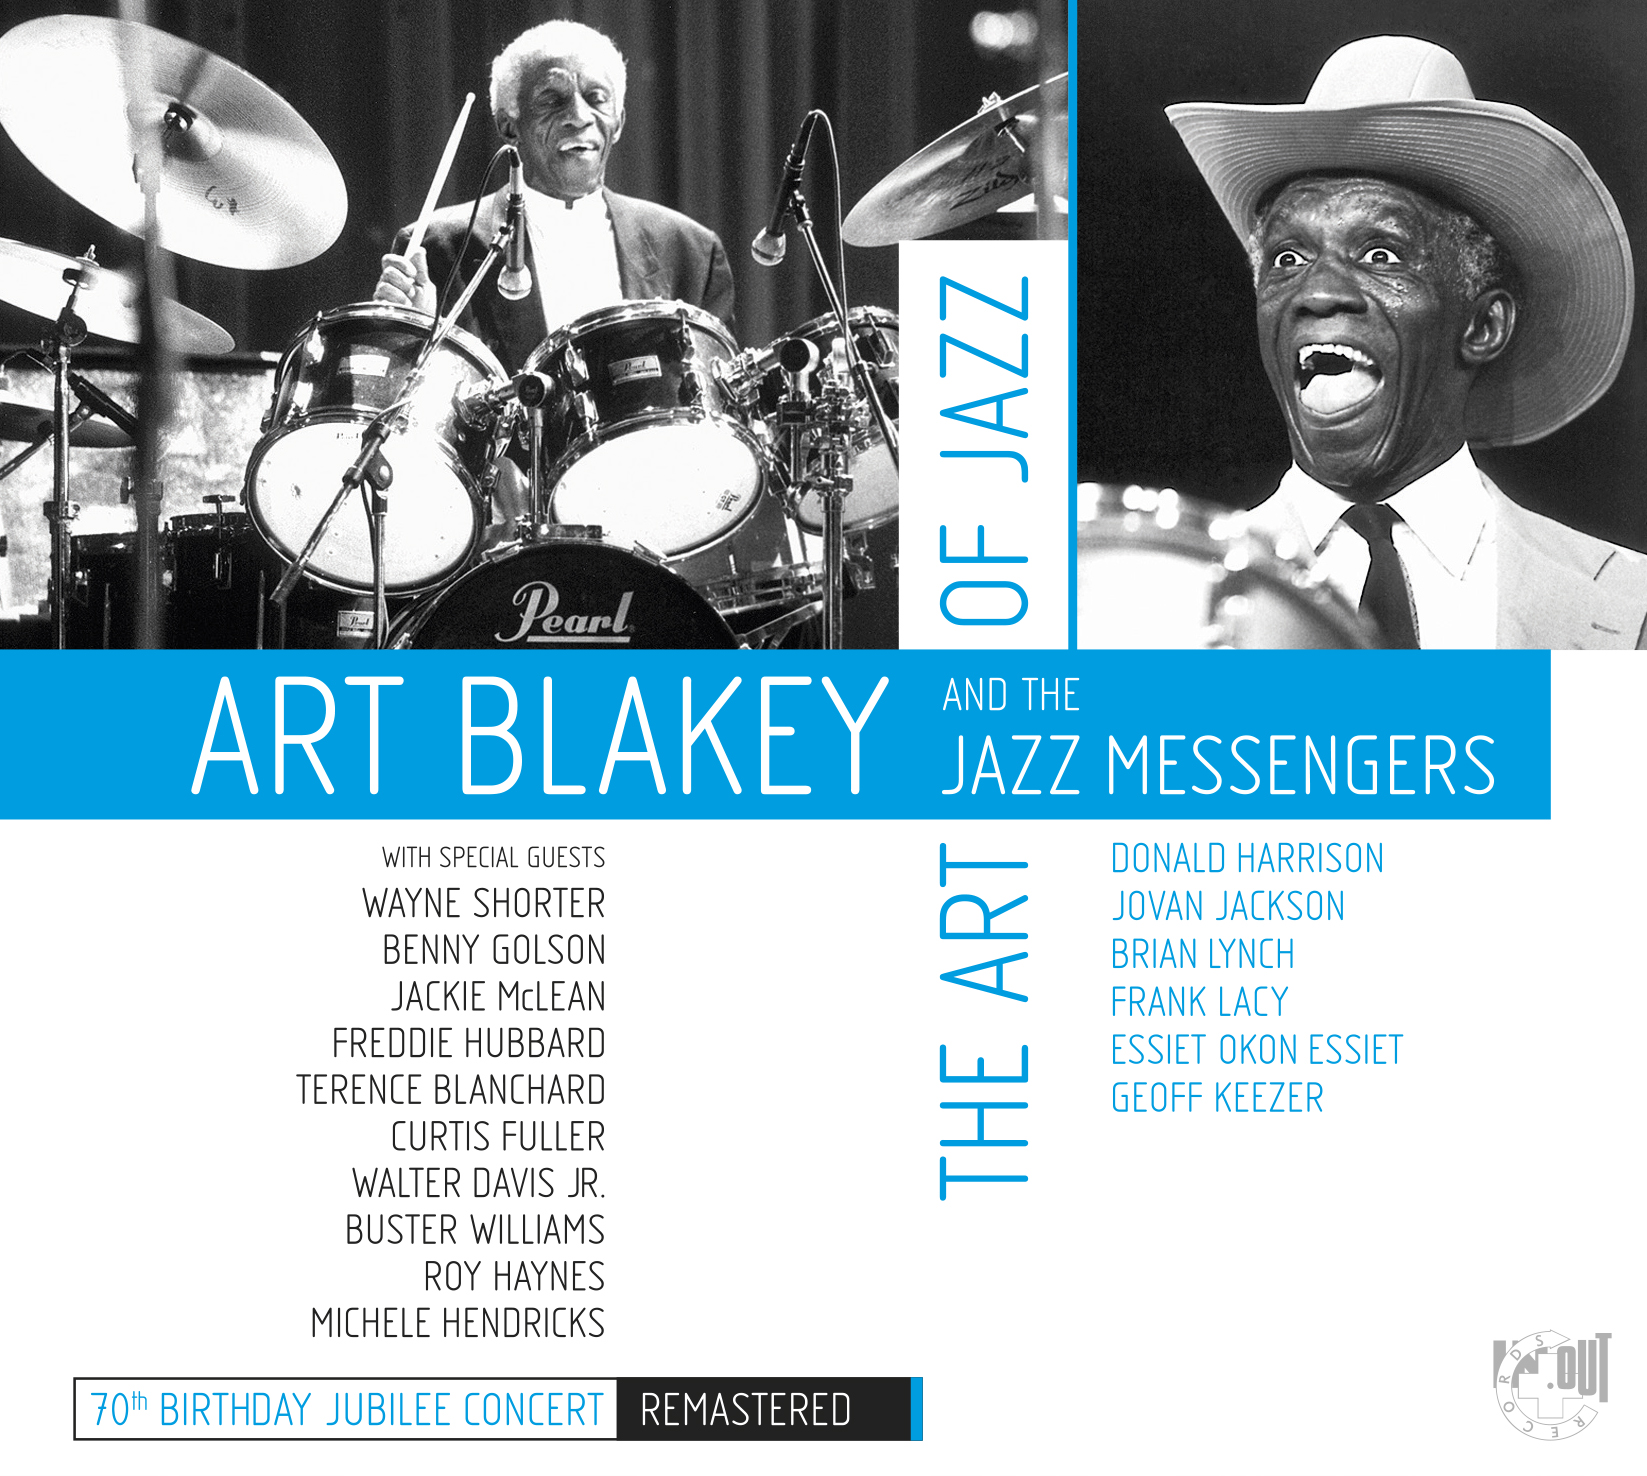 ART BLAKEY AND THE JAZZ MESSENGERS - THE ART OF JAZZ